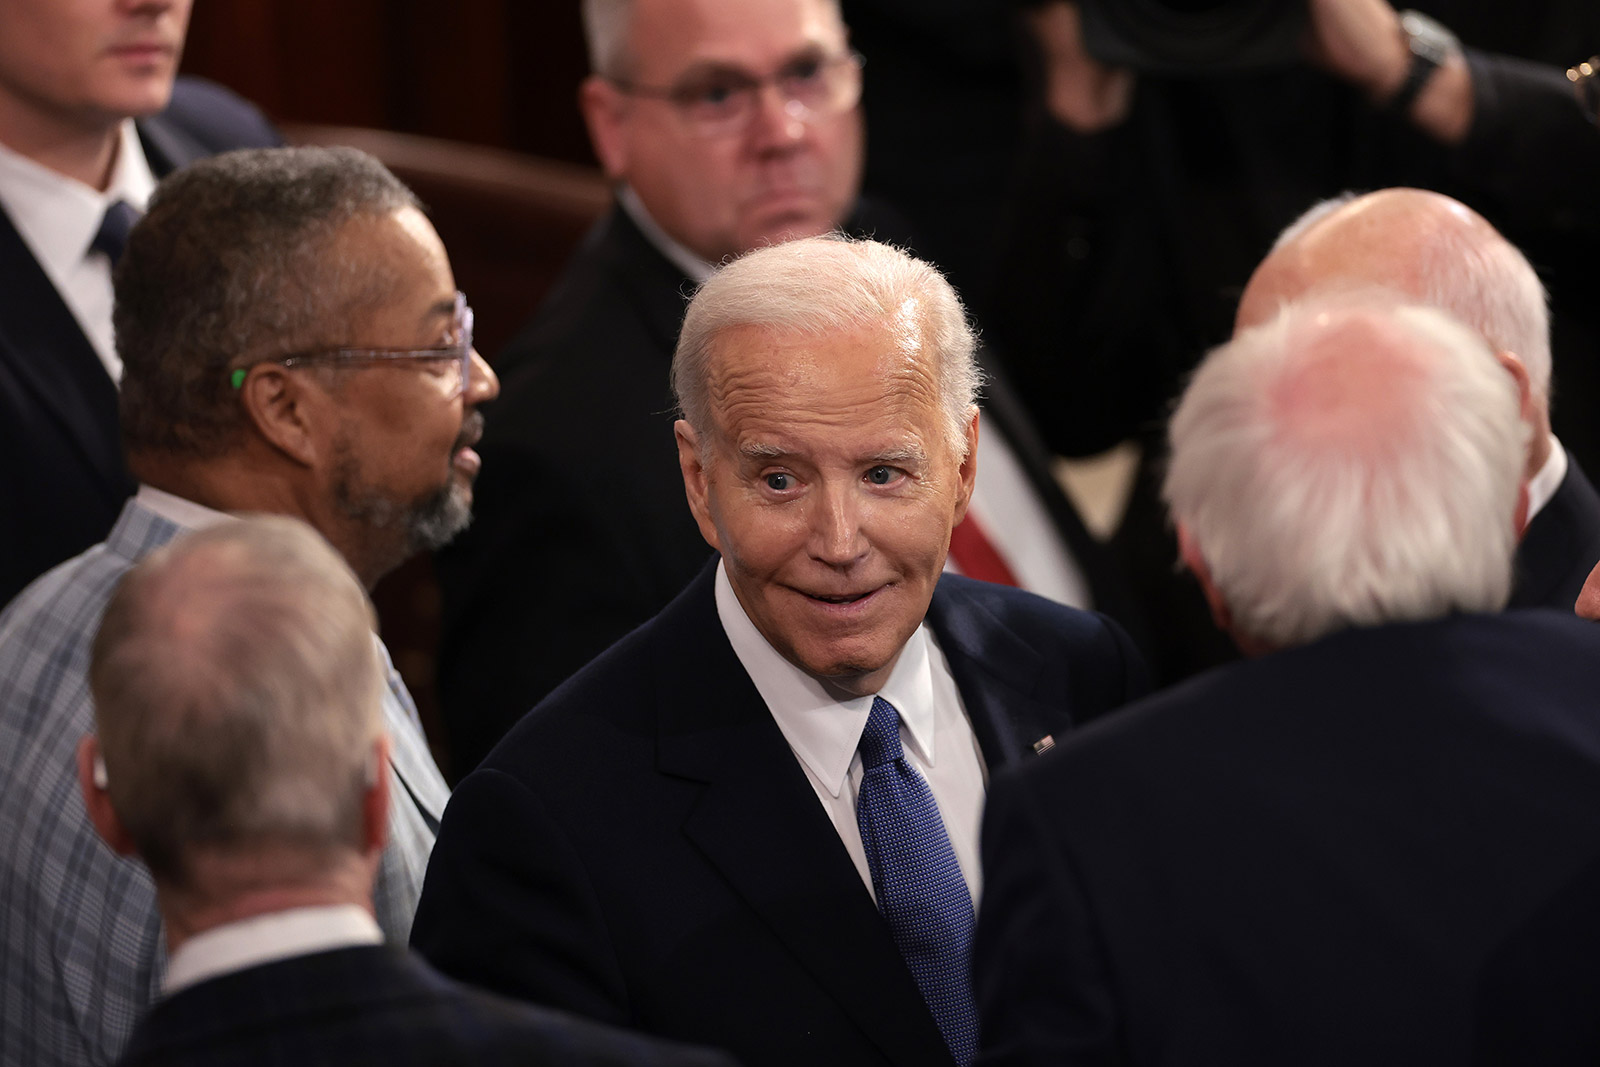 Biden greets members of Congress after his speech.